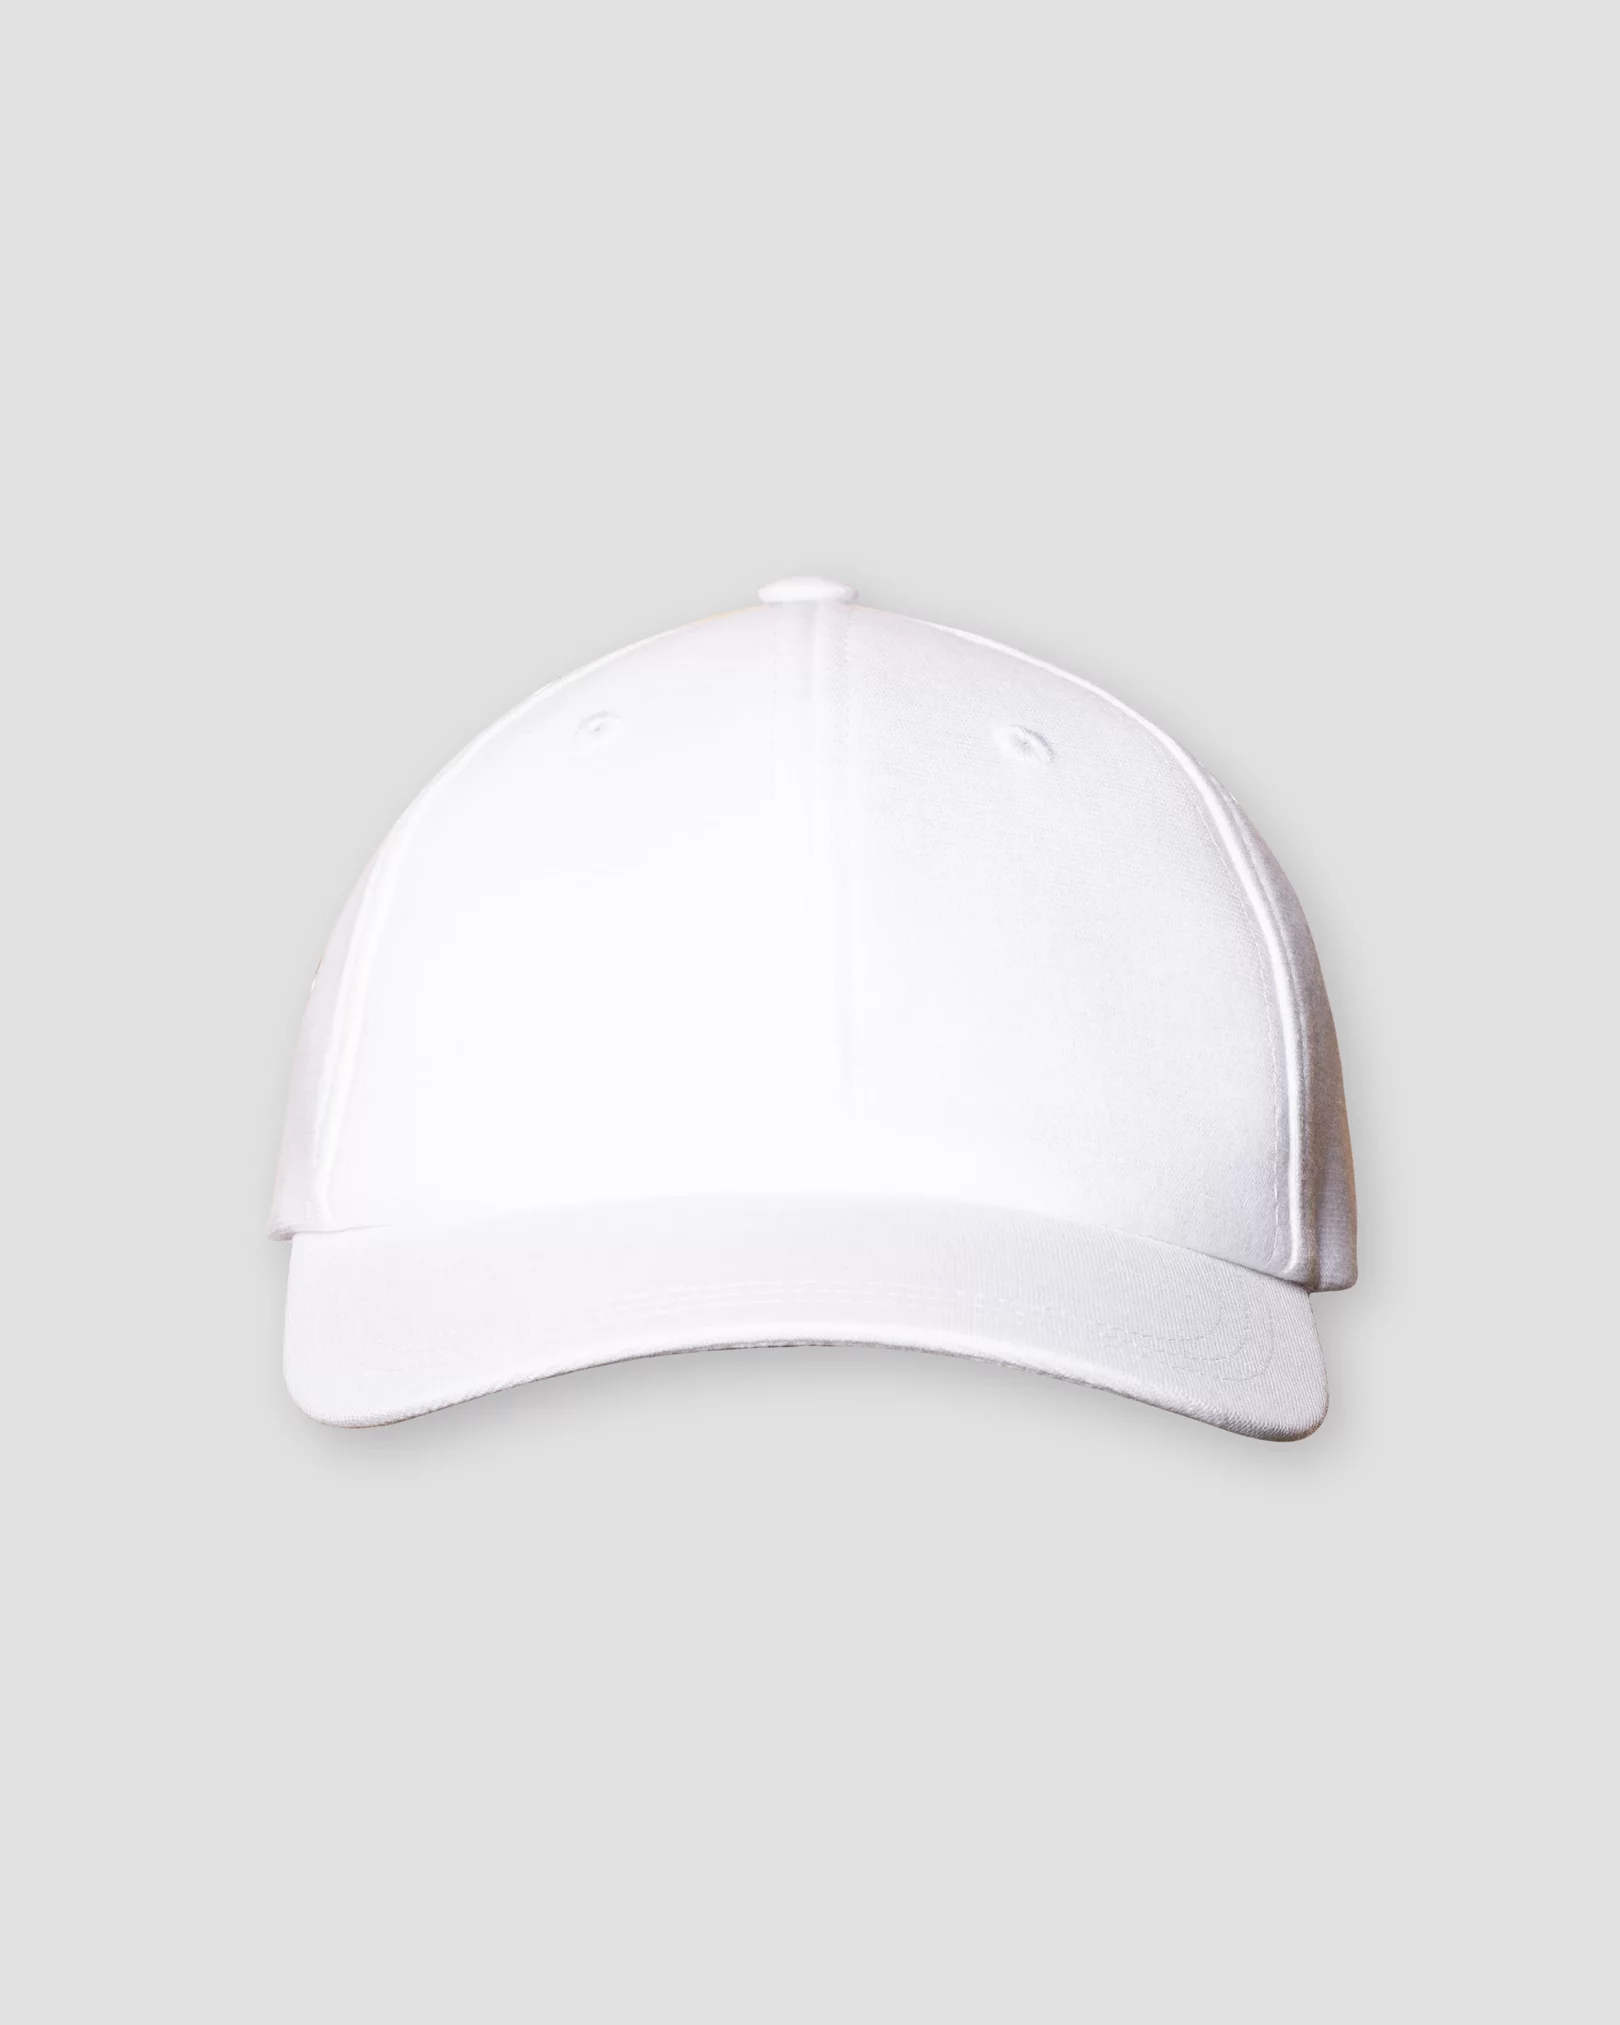 Eton - white baseball cap